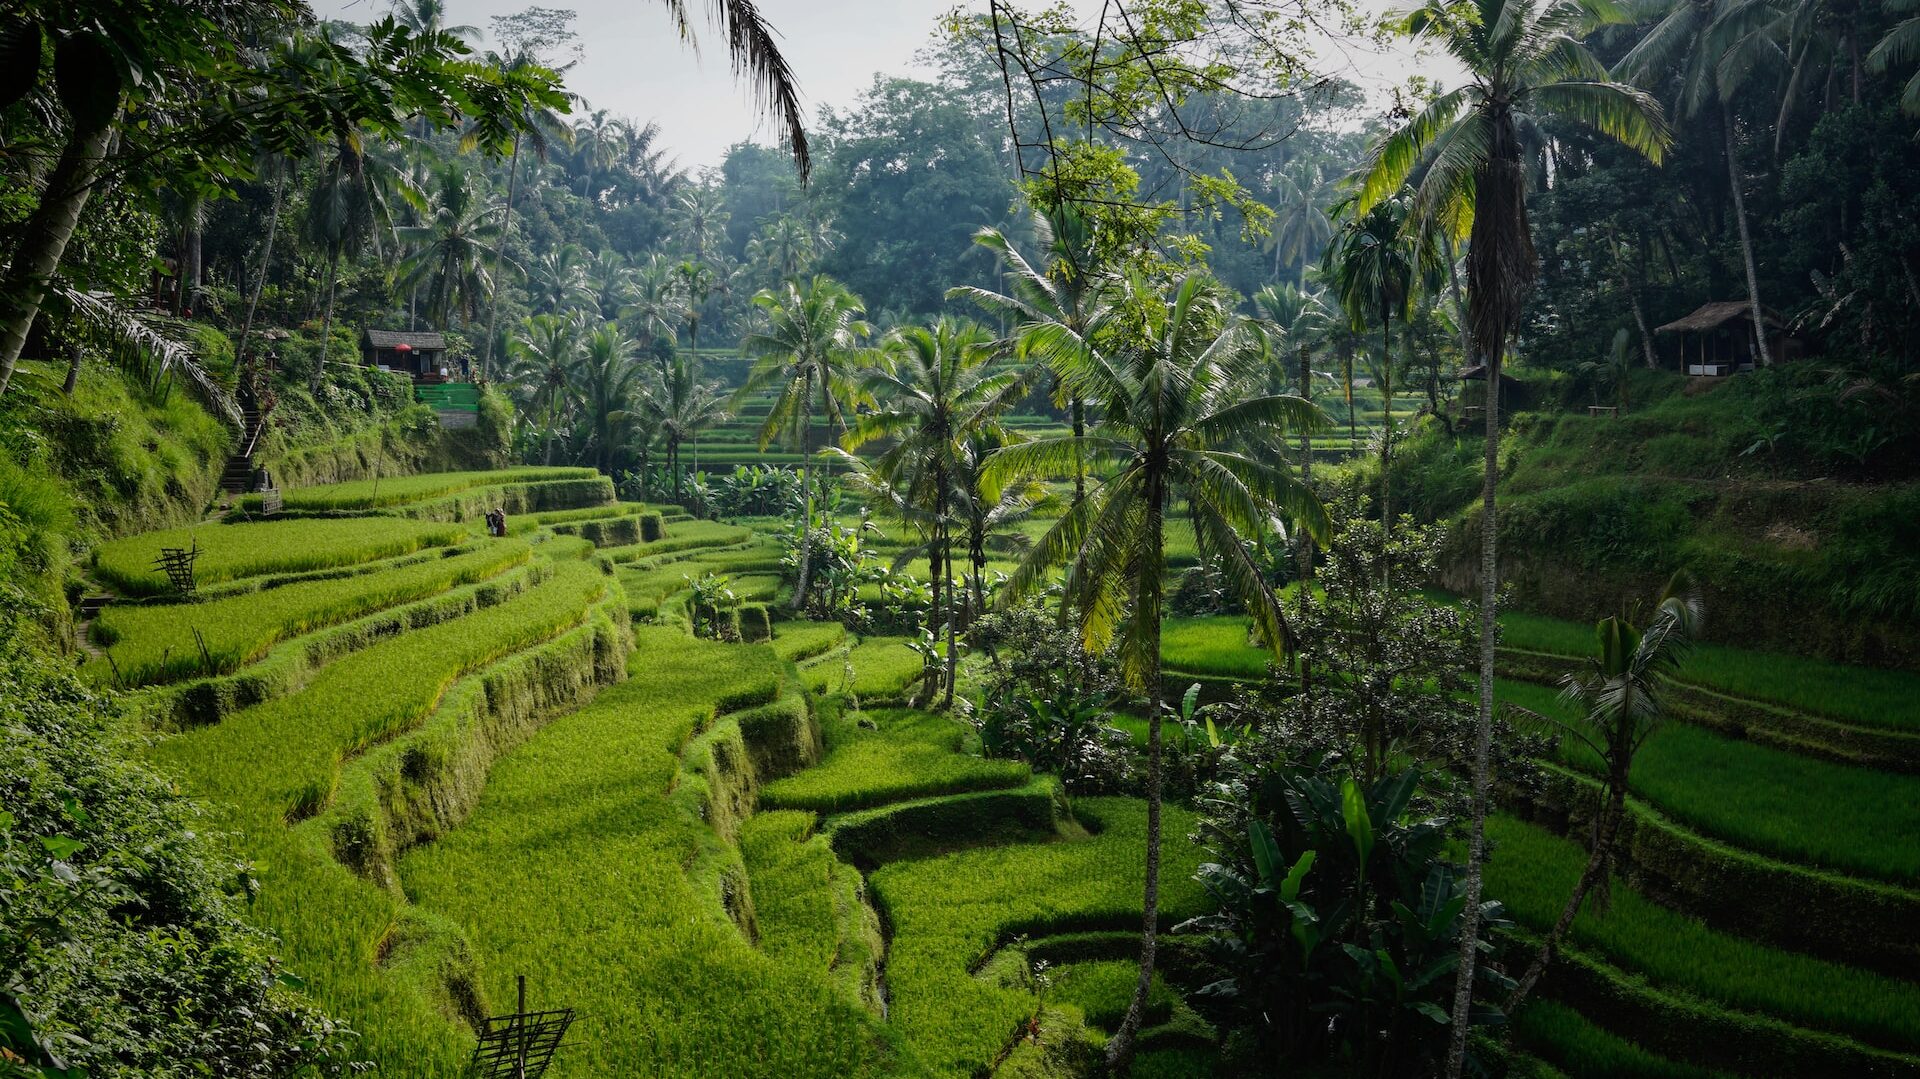 Tegelalang rice terraces, Bali